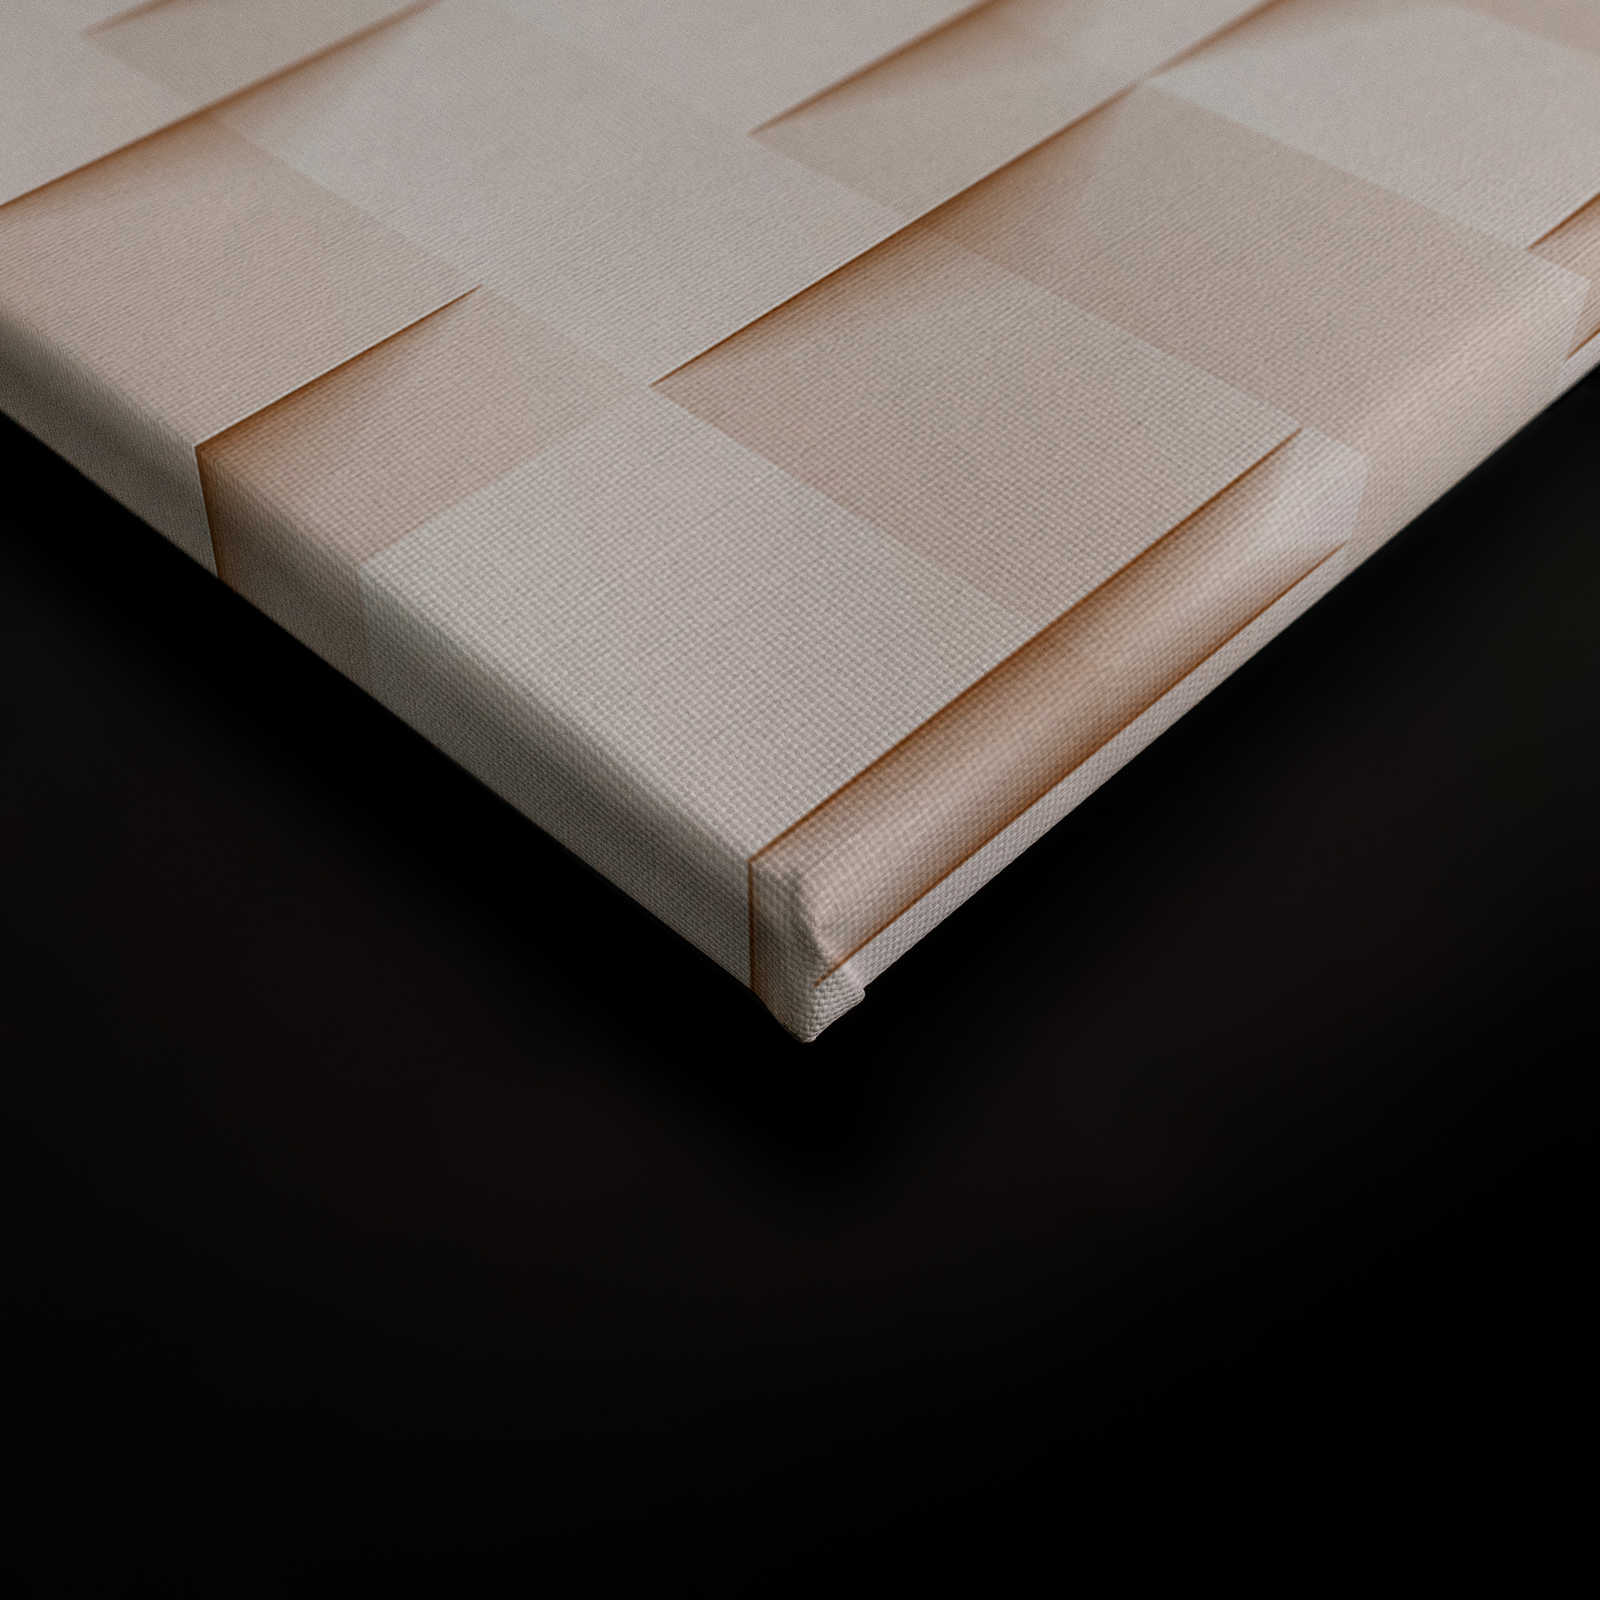             Paper House 1 - Leinwandbild 3D Struktur Papier Origami Falten – 1,20 m x 0,80 m
        